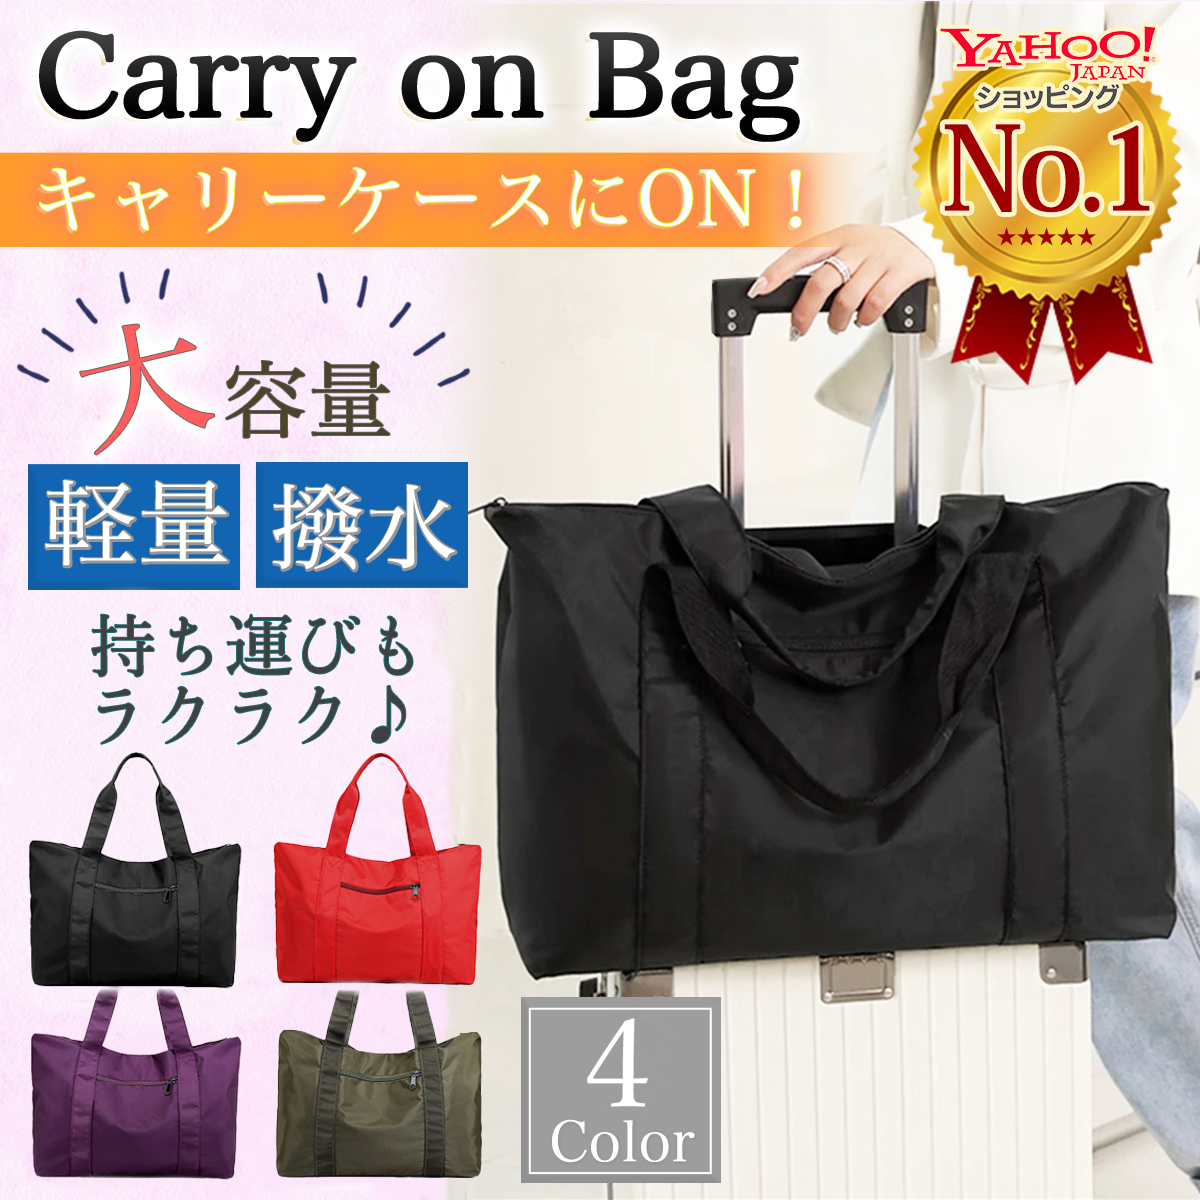  Carry on bag Boston bag folding smaller traveling bag travel bag business suit case bag fixation 